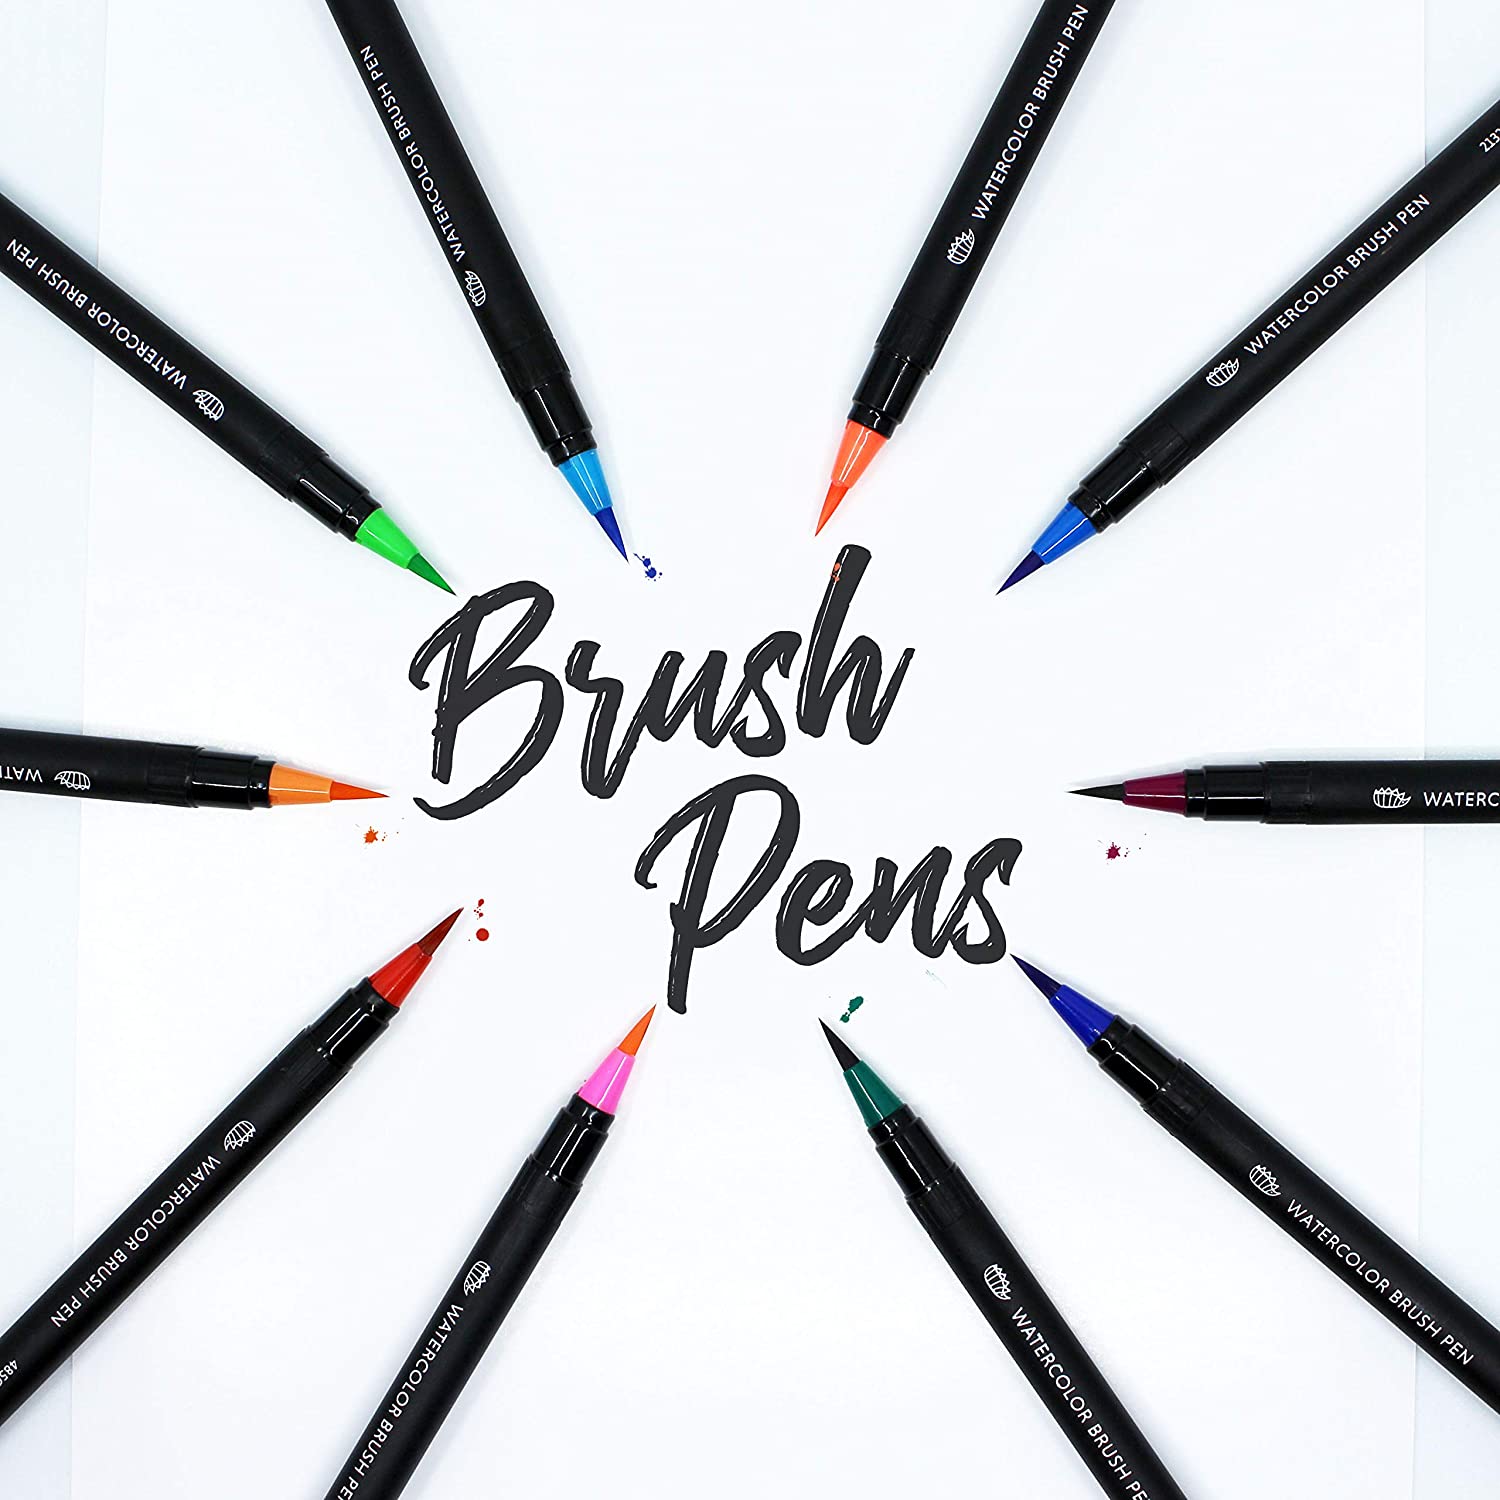 Monaco Pro Drawing Pens and Watercolor Brush Pens